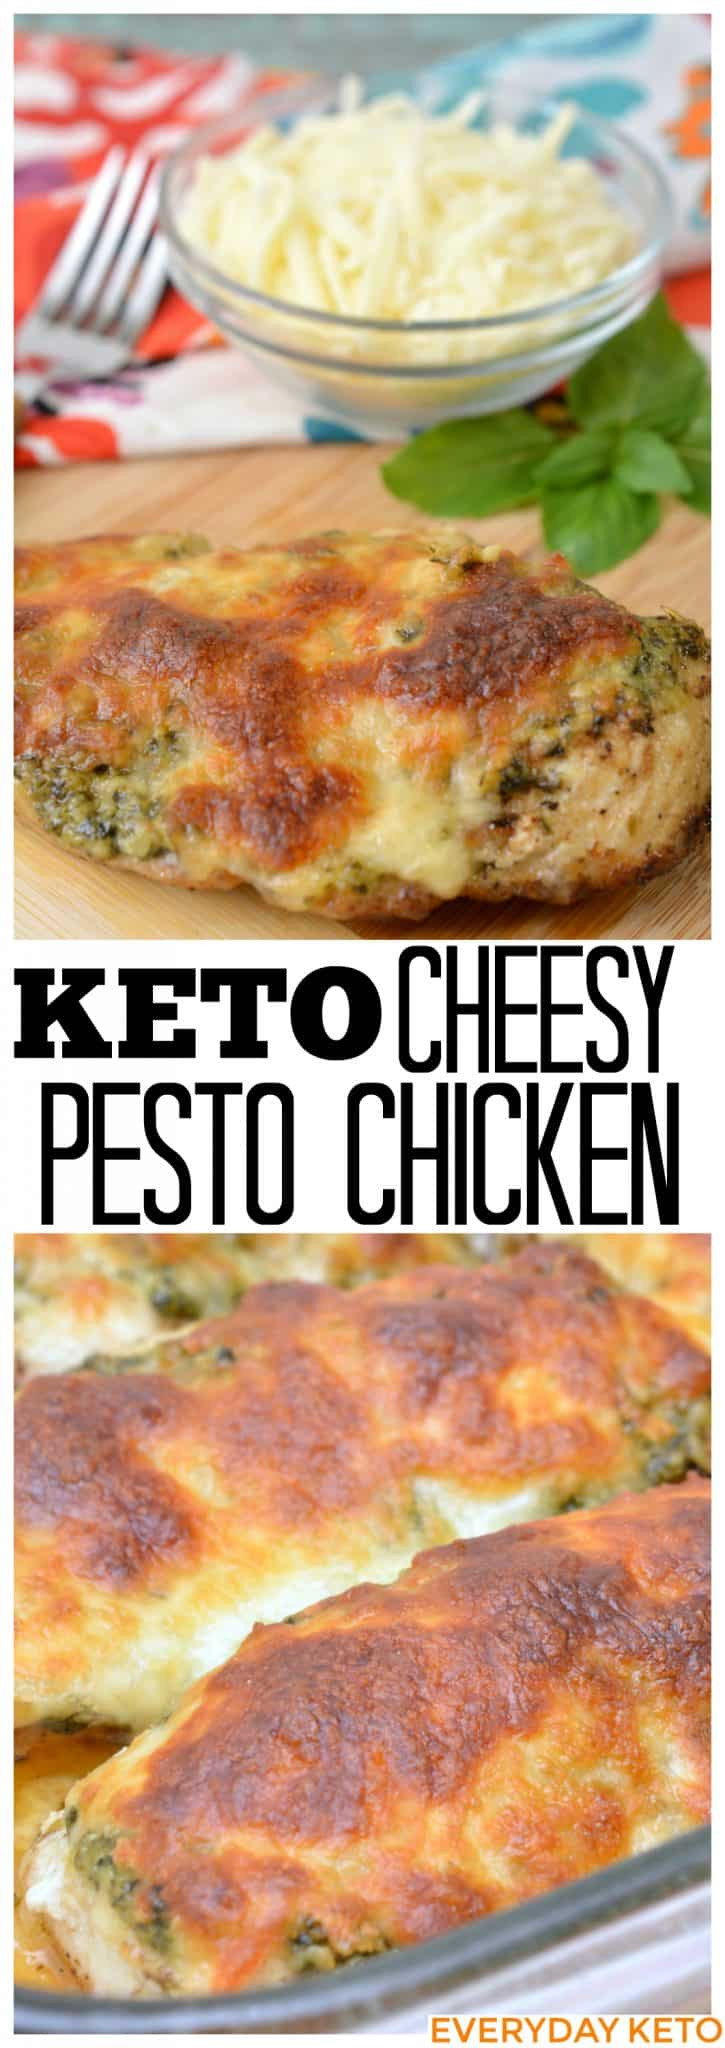 Pesto Chicken Keto
 Keto Friendly Cheesy Pesto Chicken